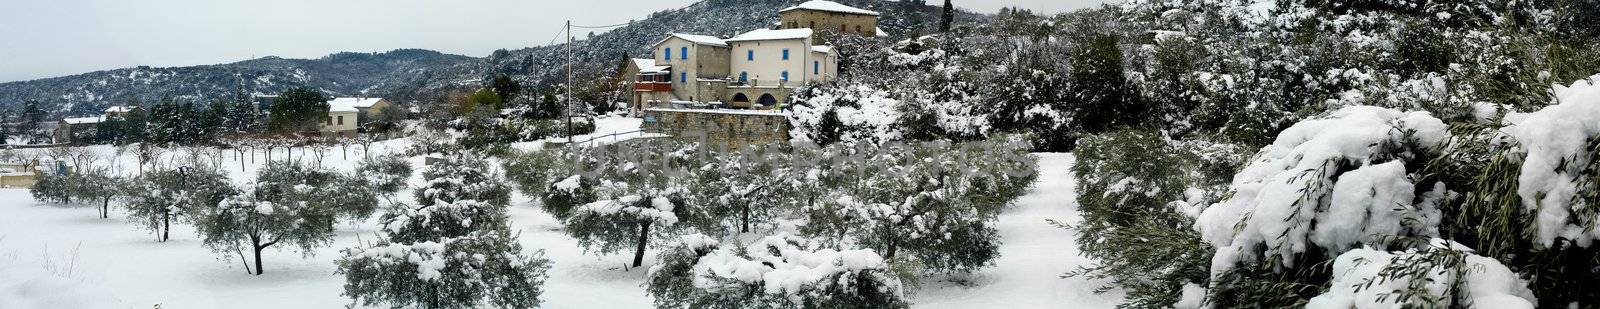 Landscape of Gard under snow by gillespaire